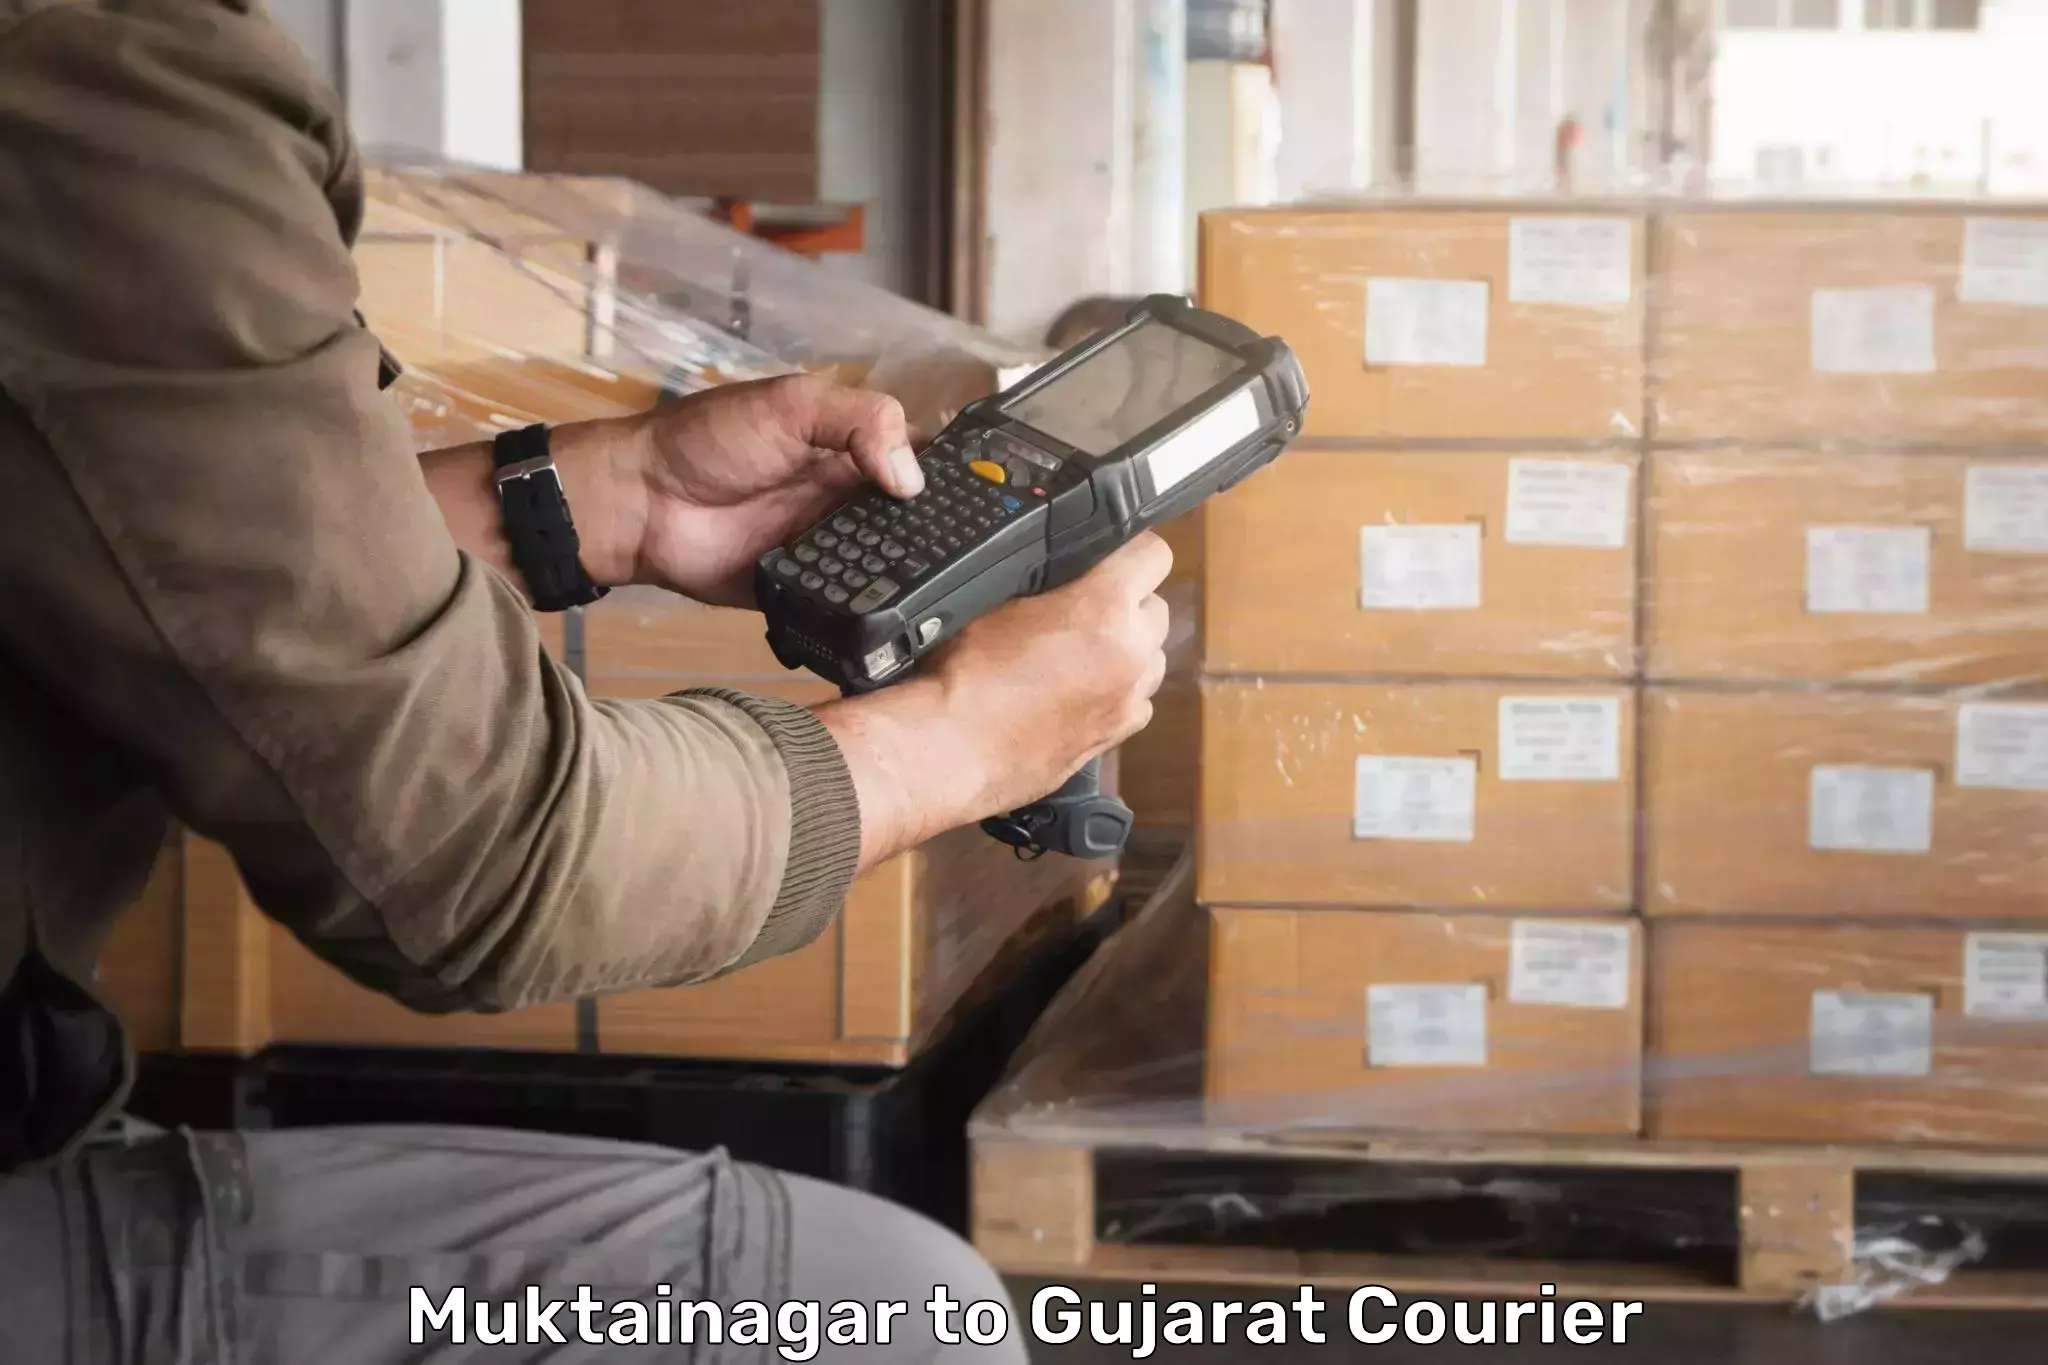 Reliable delivery network Muktainagar to Narmada Gujarat